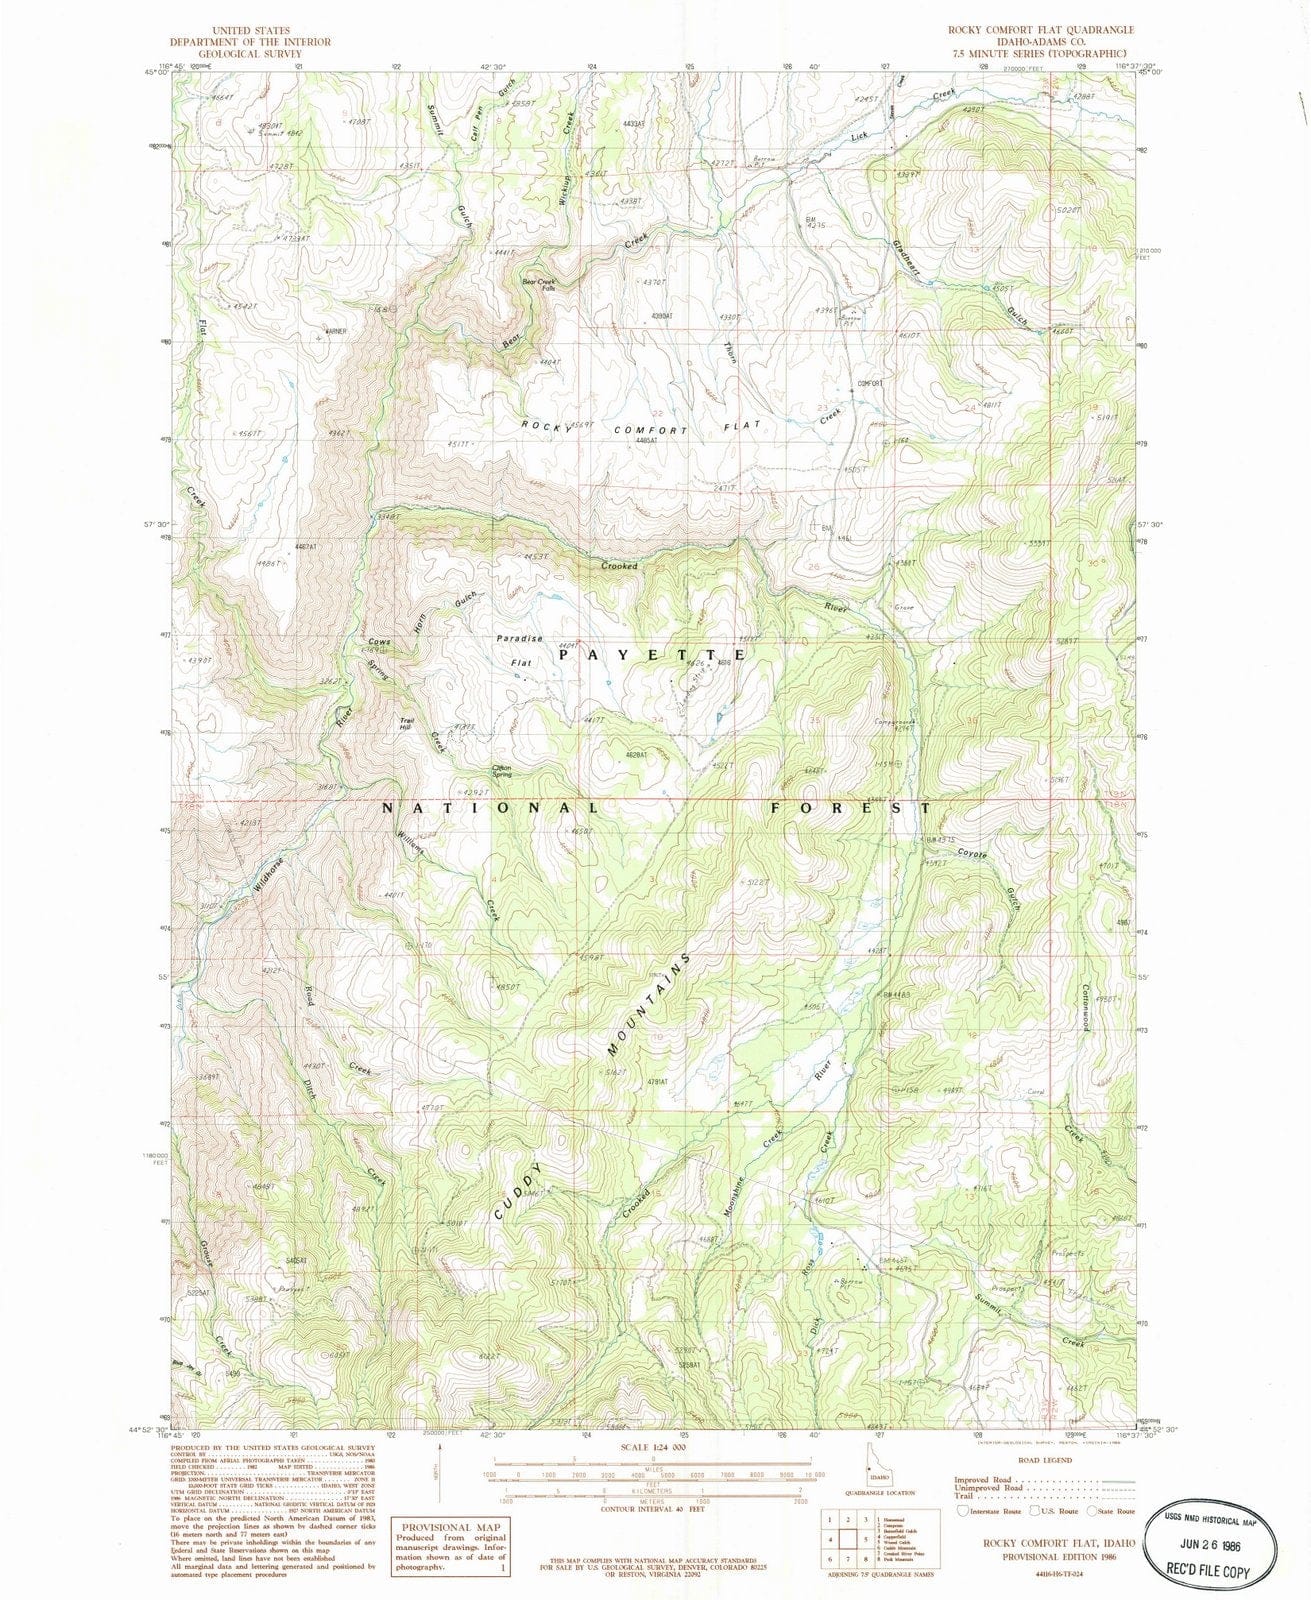 1986 Rocky Comfort Flat, ID - Idaho - USGS Topographic Map